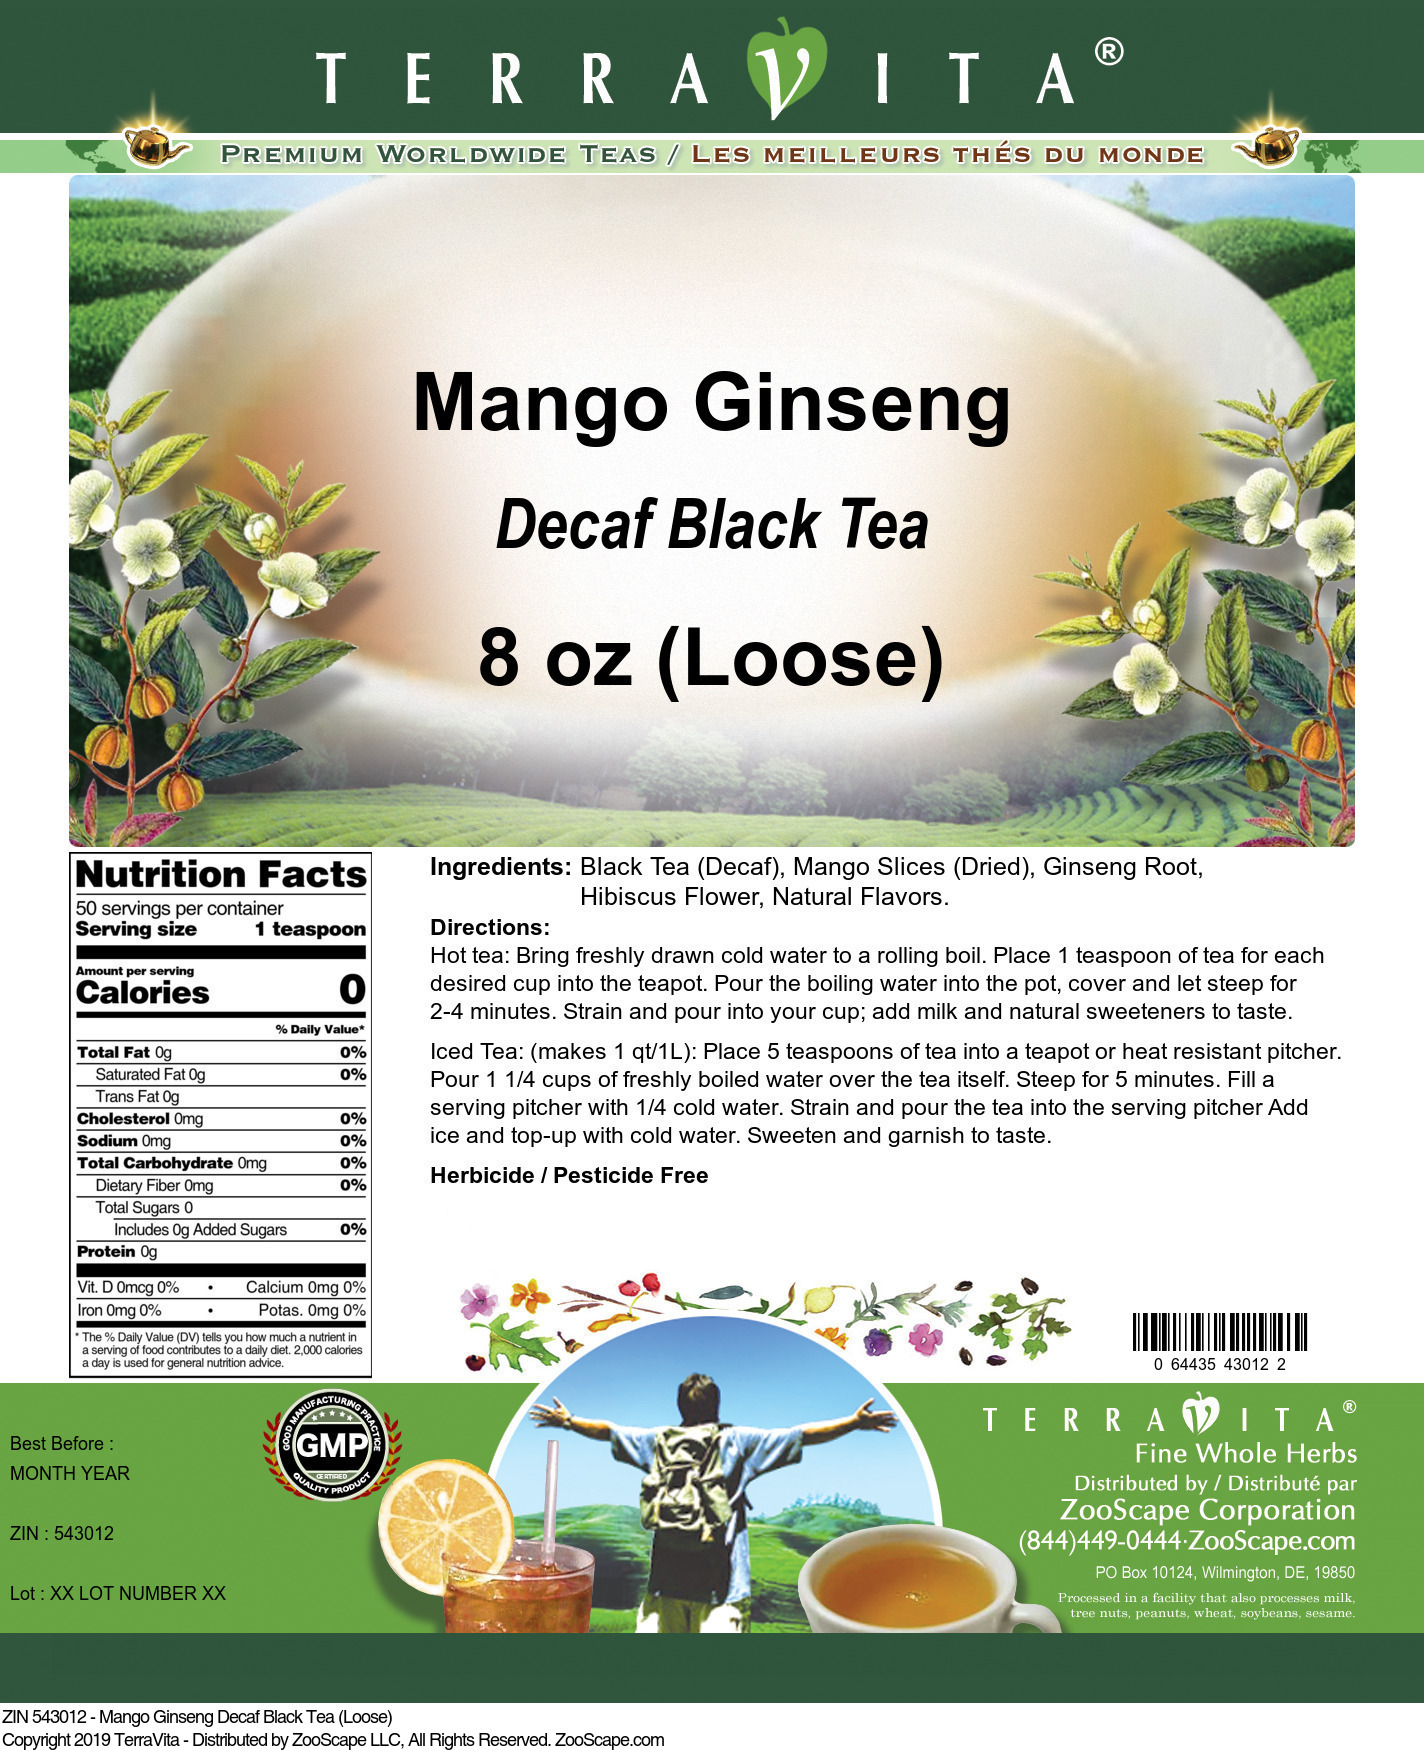 Mango Ginseng Decaf Black Tea (Loose) - Label